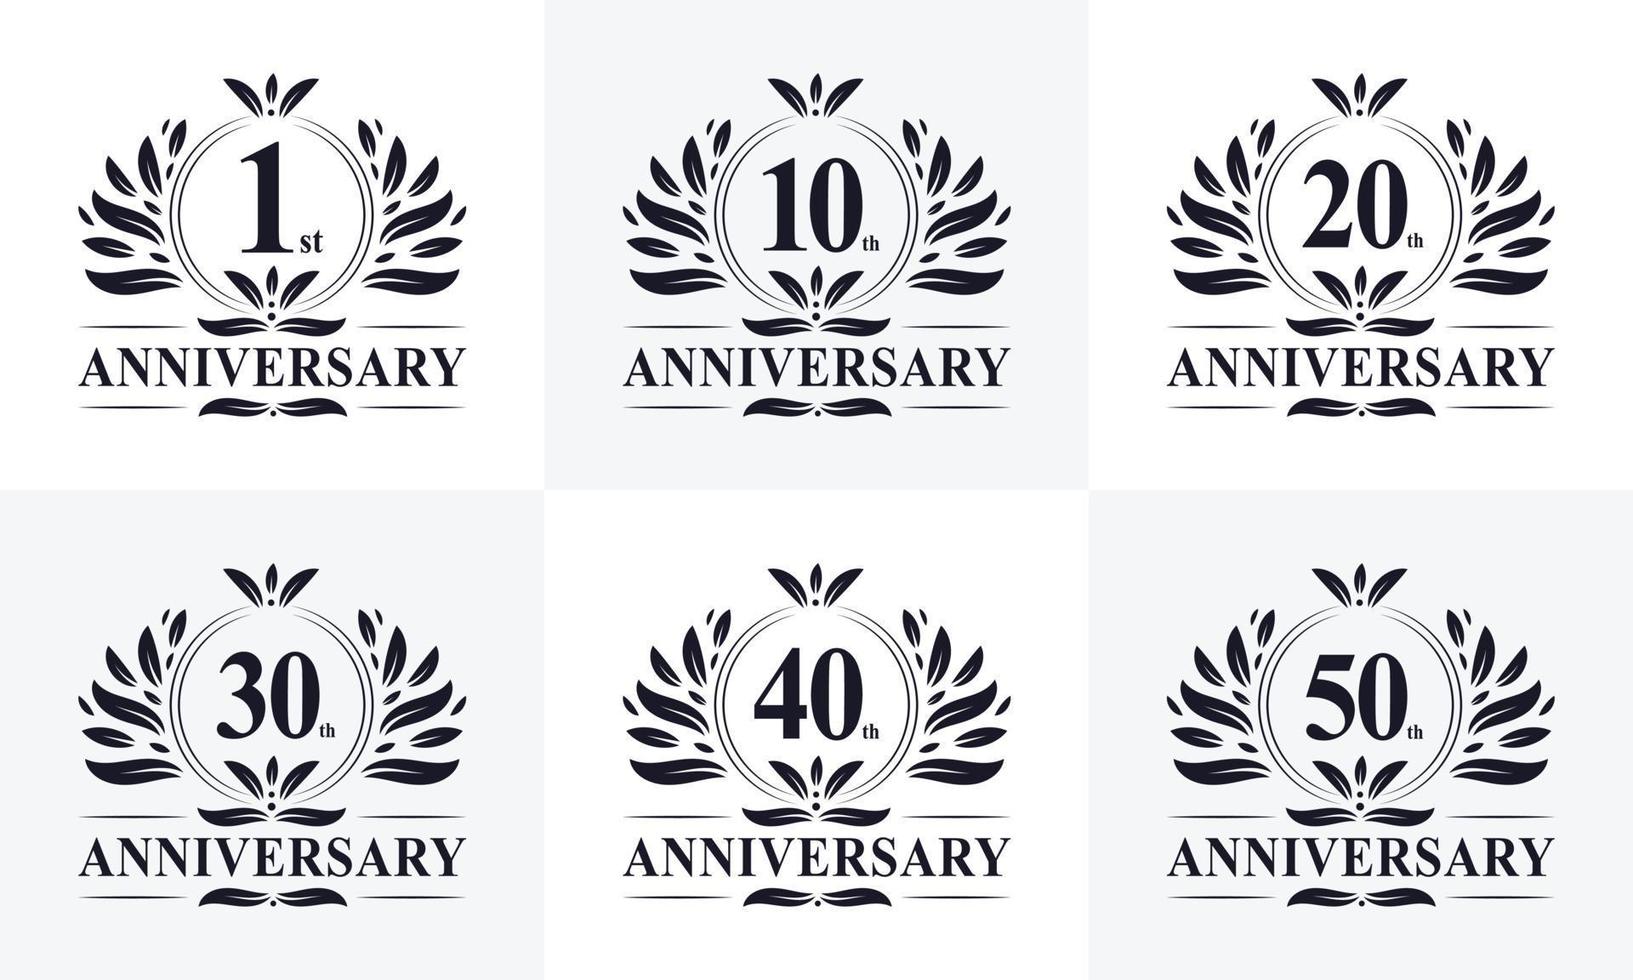 6 Retro Vintage Anniversary Badge Logo. Collection off 6 Anniversary logo for Celebration vector